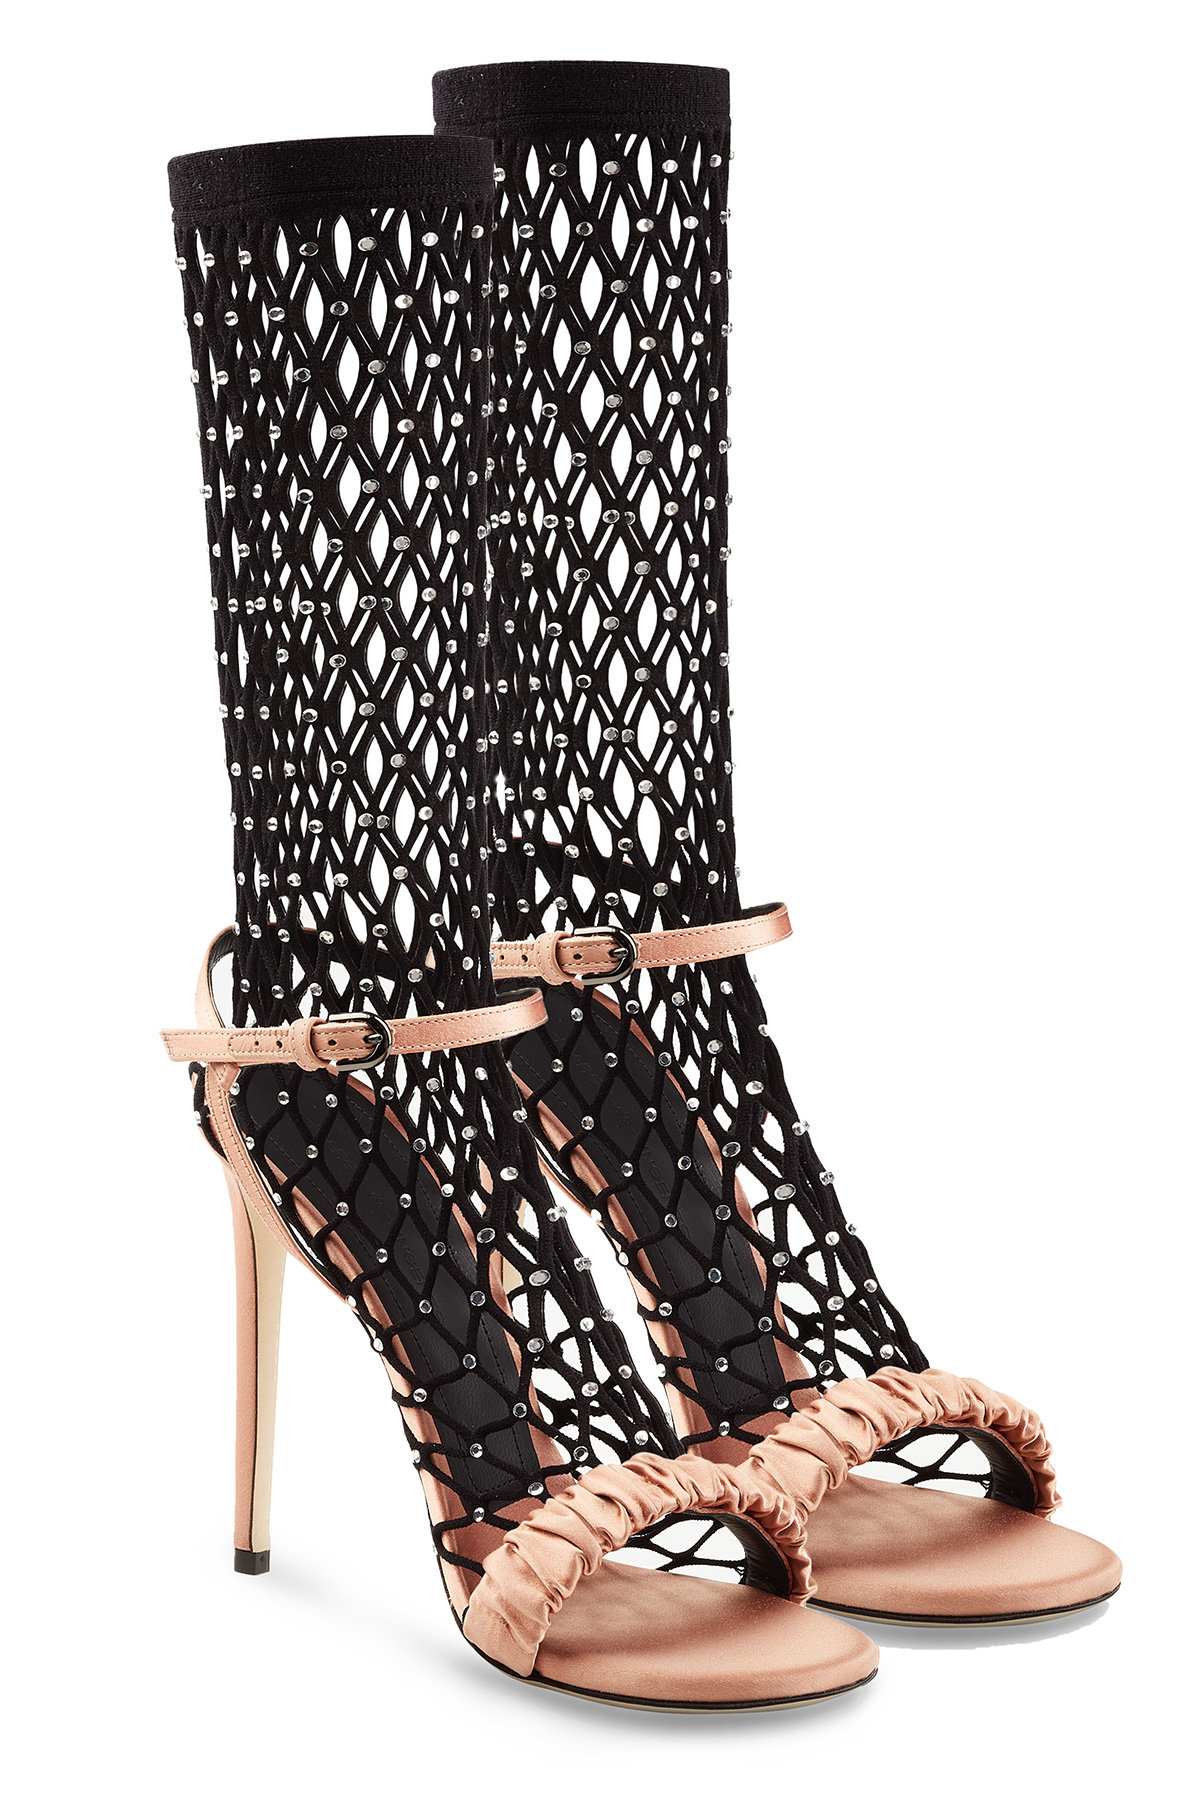 Satin Sandals with Embellished Net Socks by Marco de Vincenzo